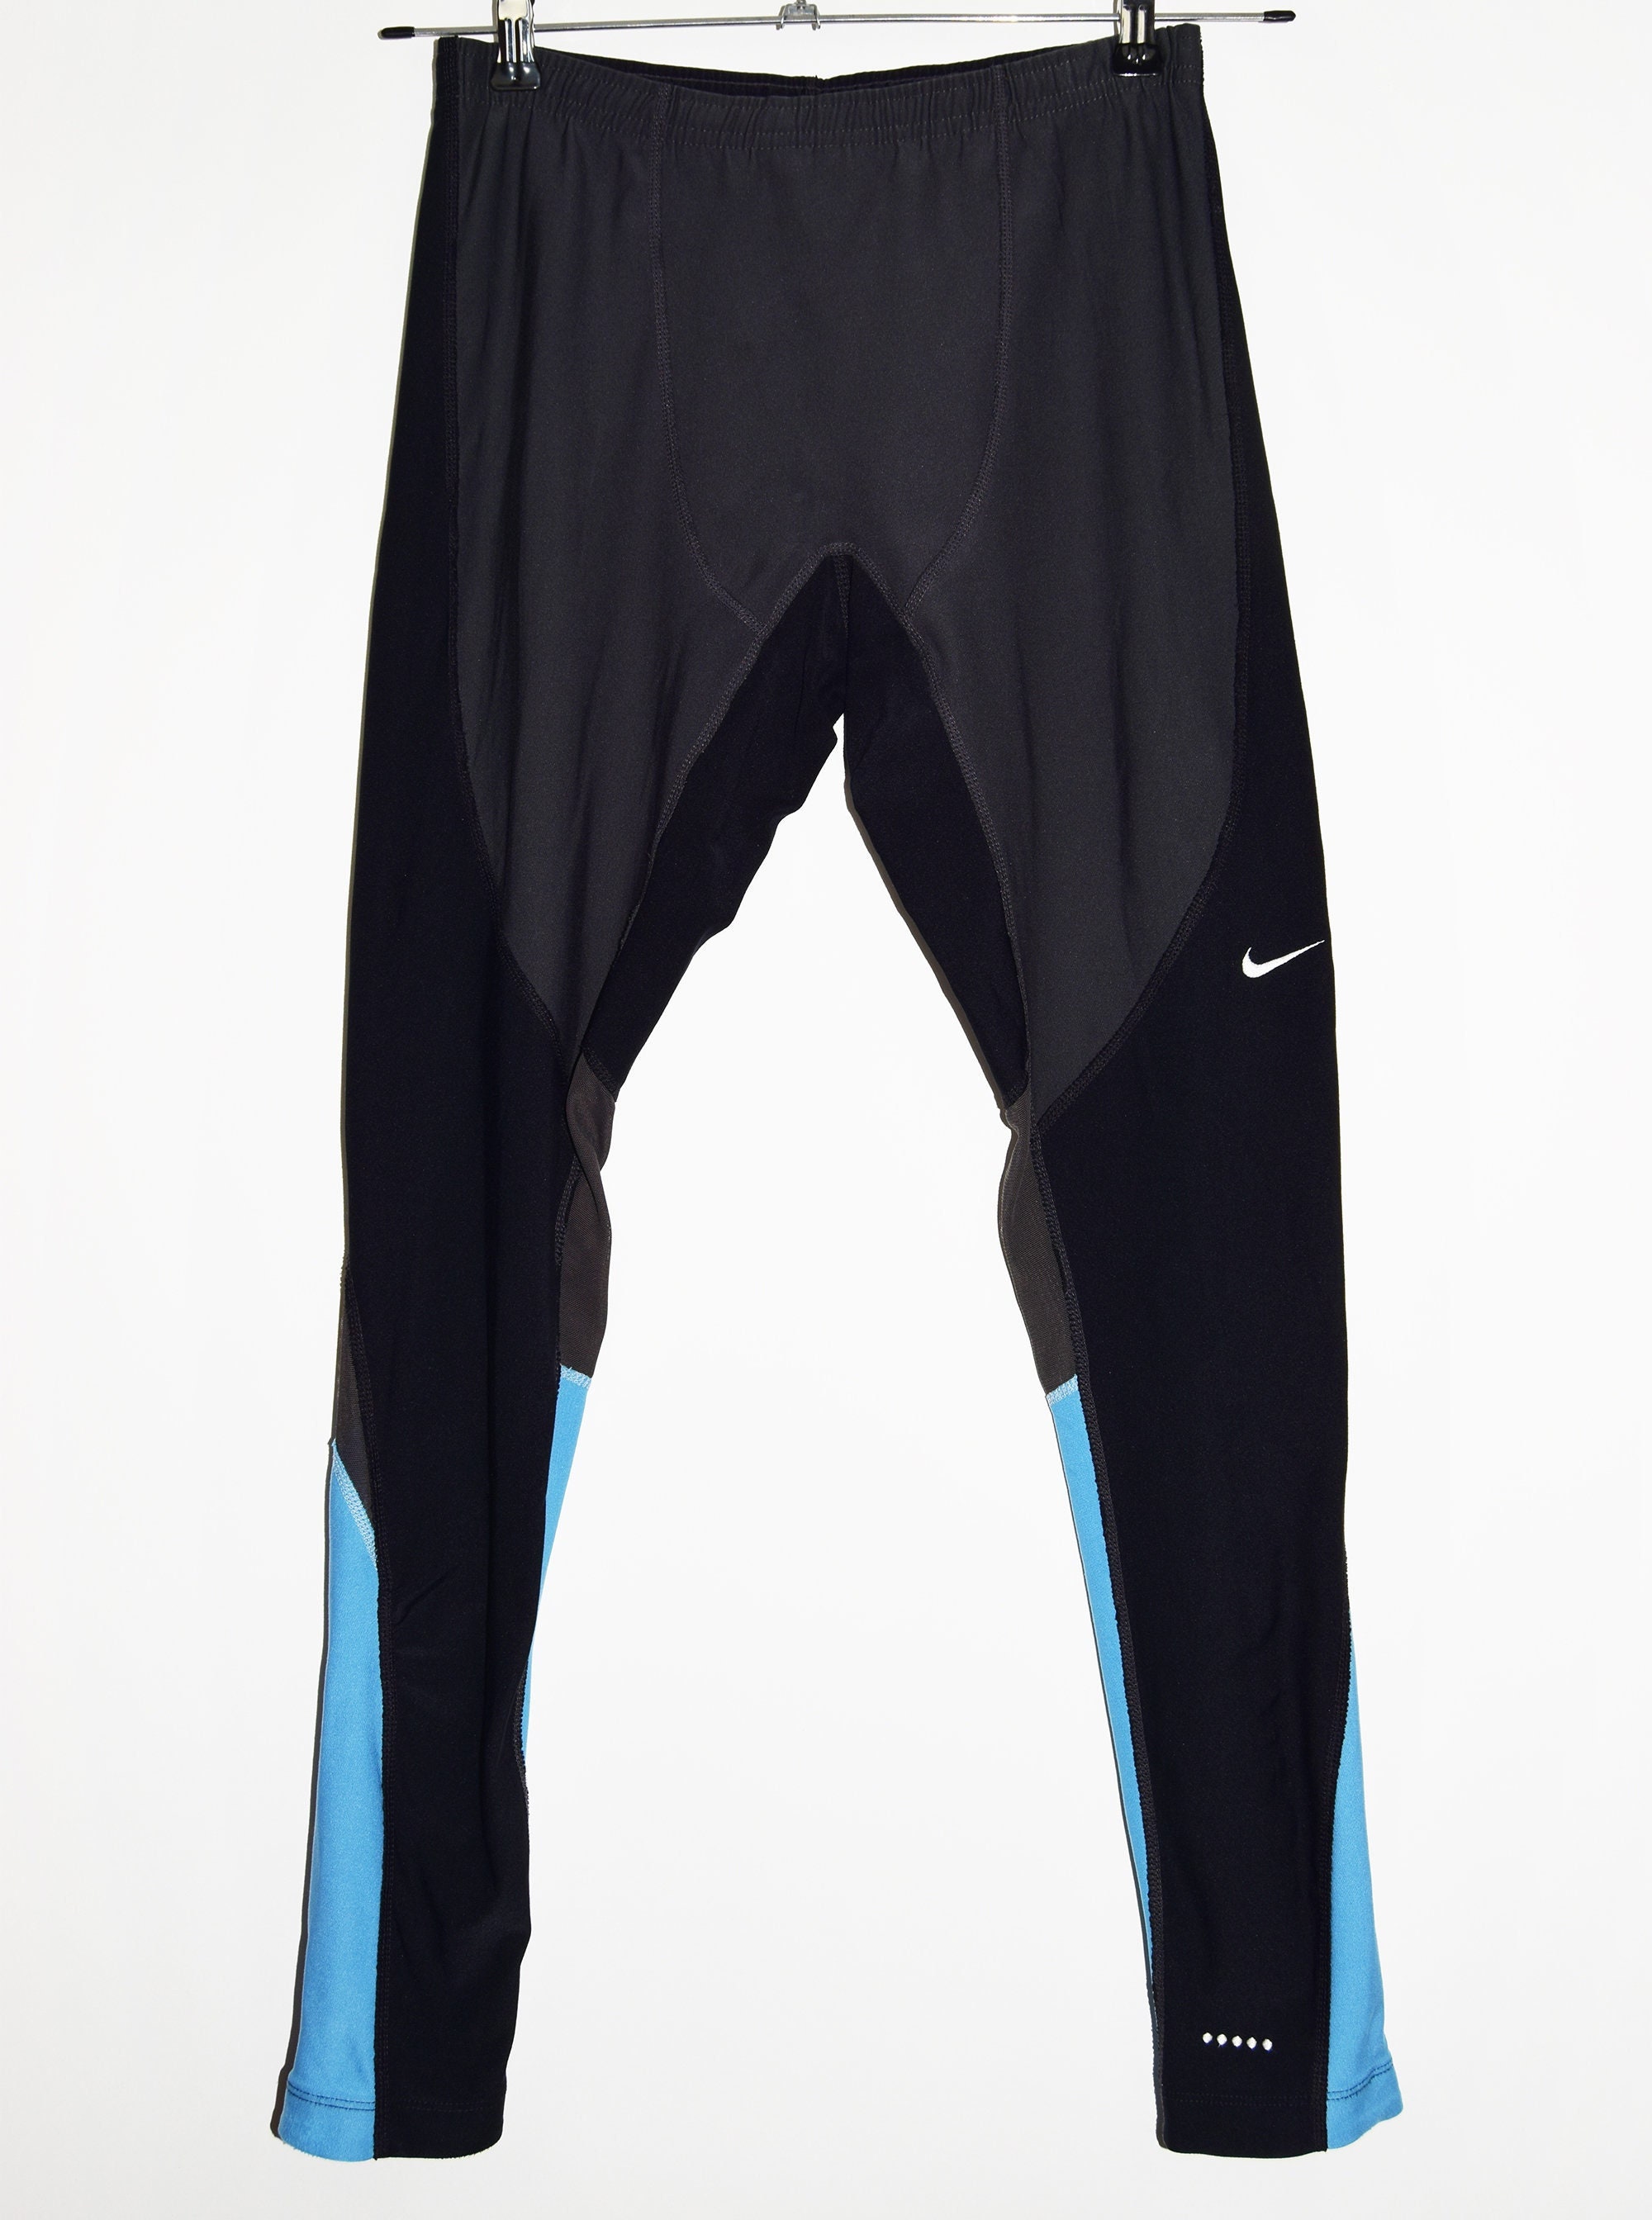 Nike Legendary Dri Fit Leggings. Small. NWOT!